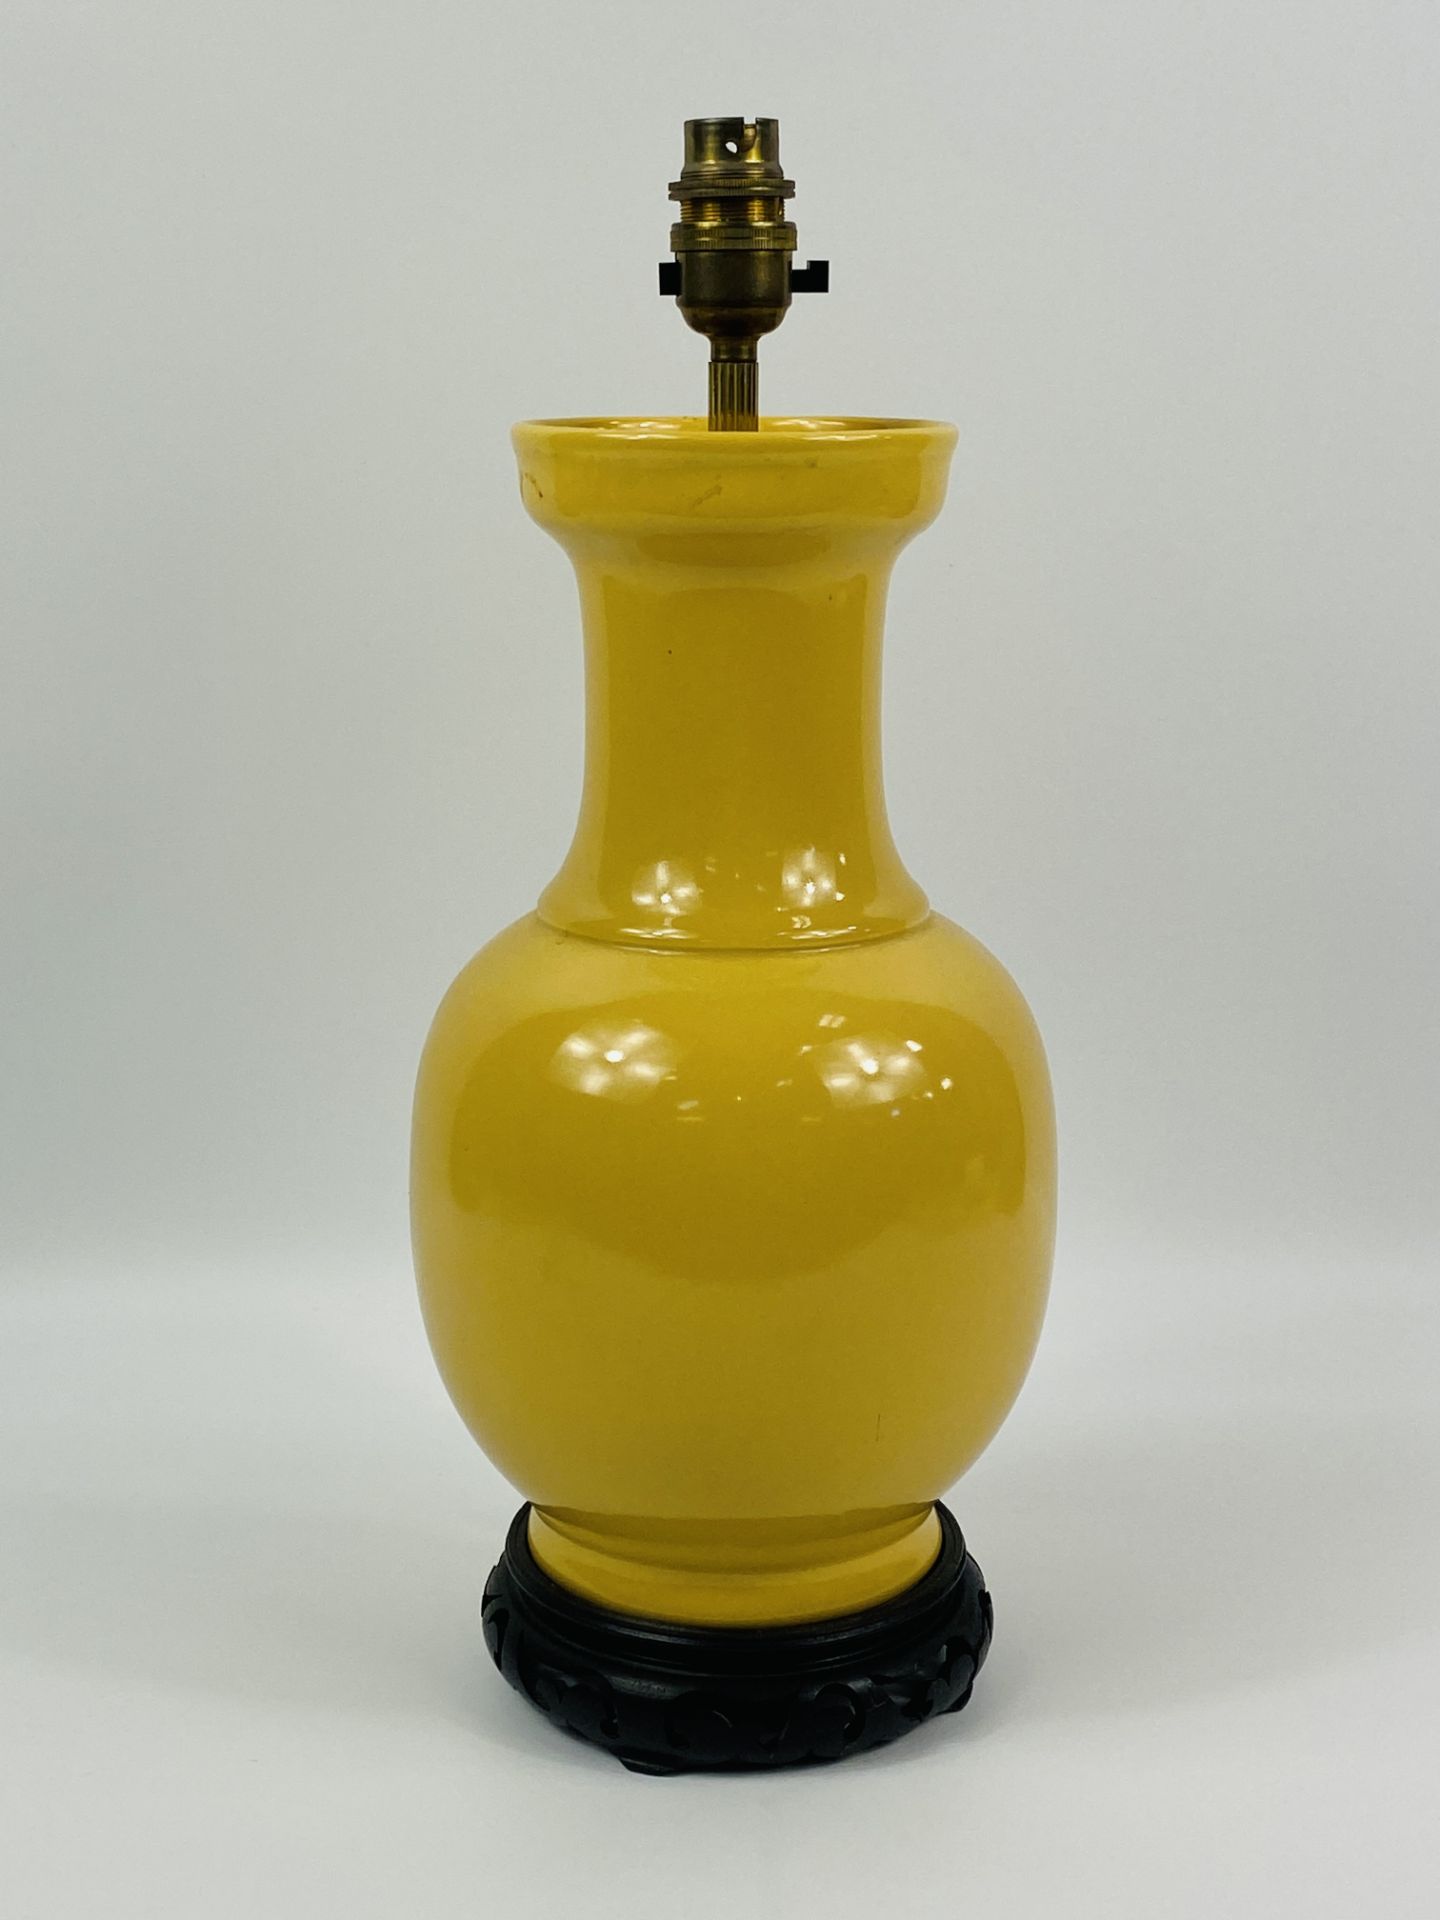 Oriental style ceramic table lamp on wood base - Image 2 of 5